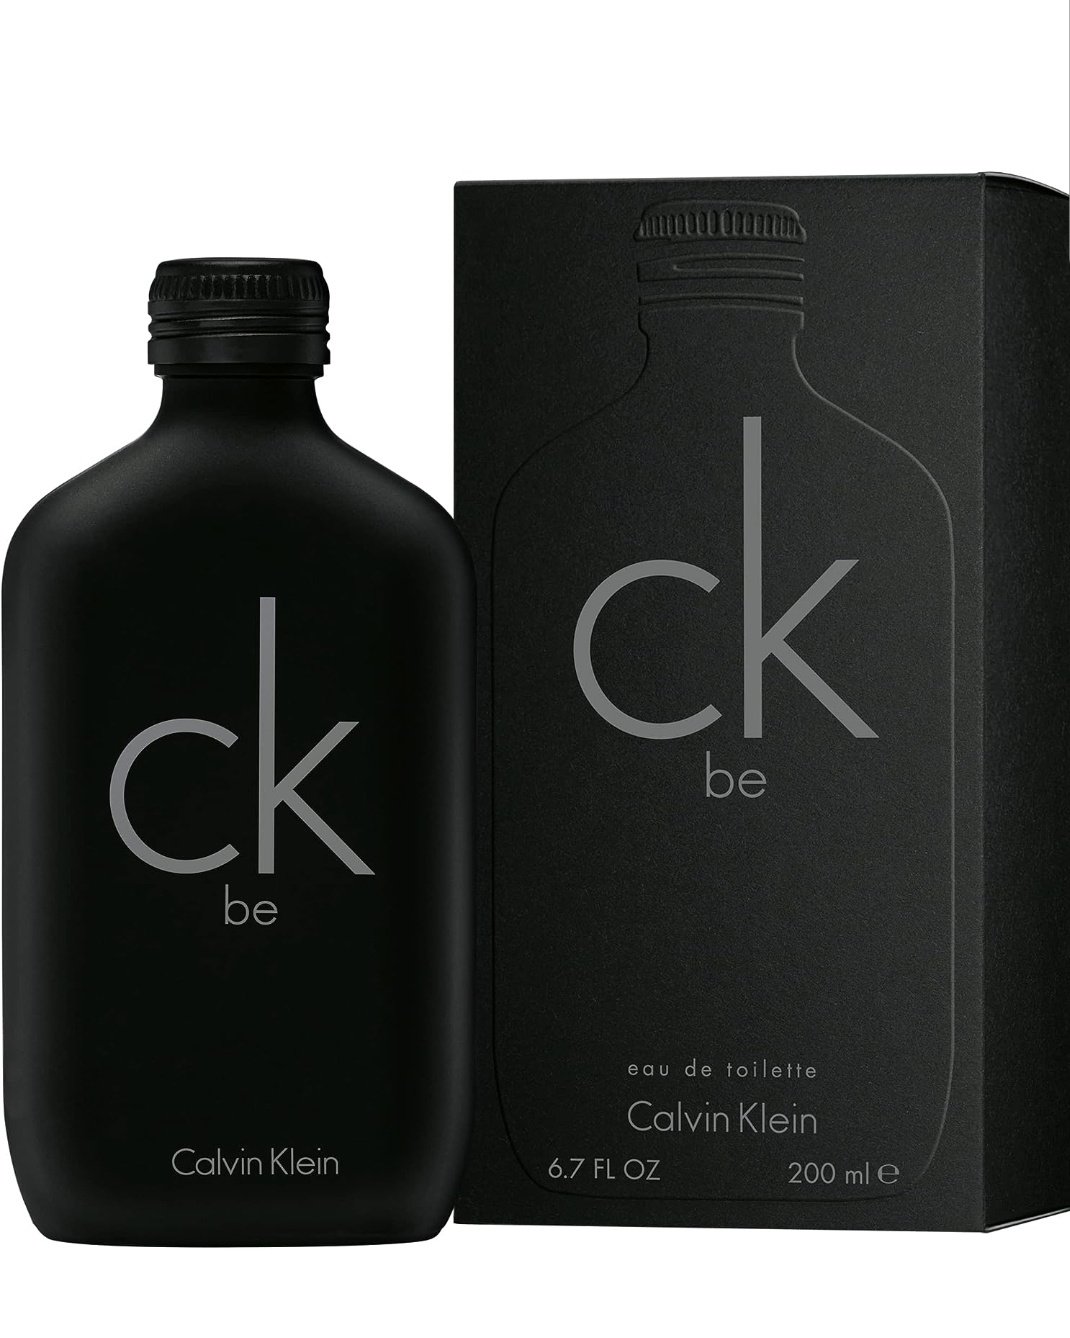 Calvin Klein CK Be - Perfume for Men & Women - Eau de Toilette 200mls